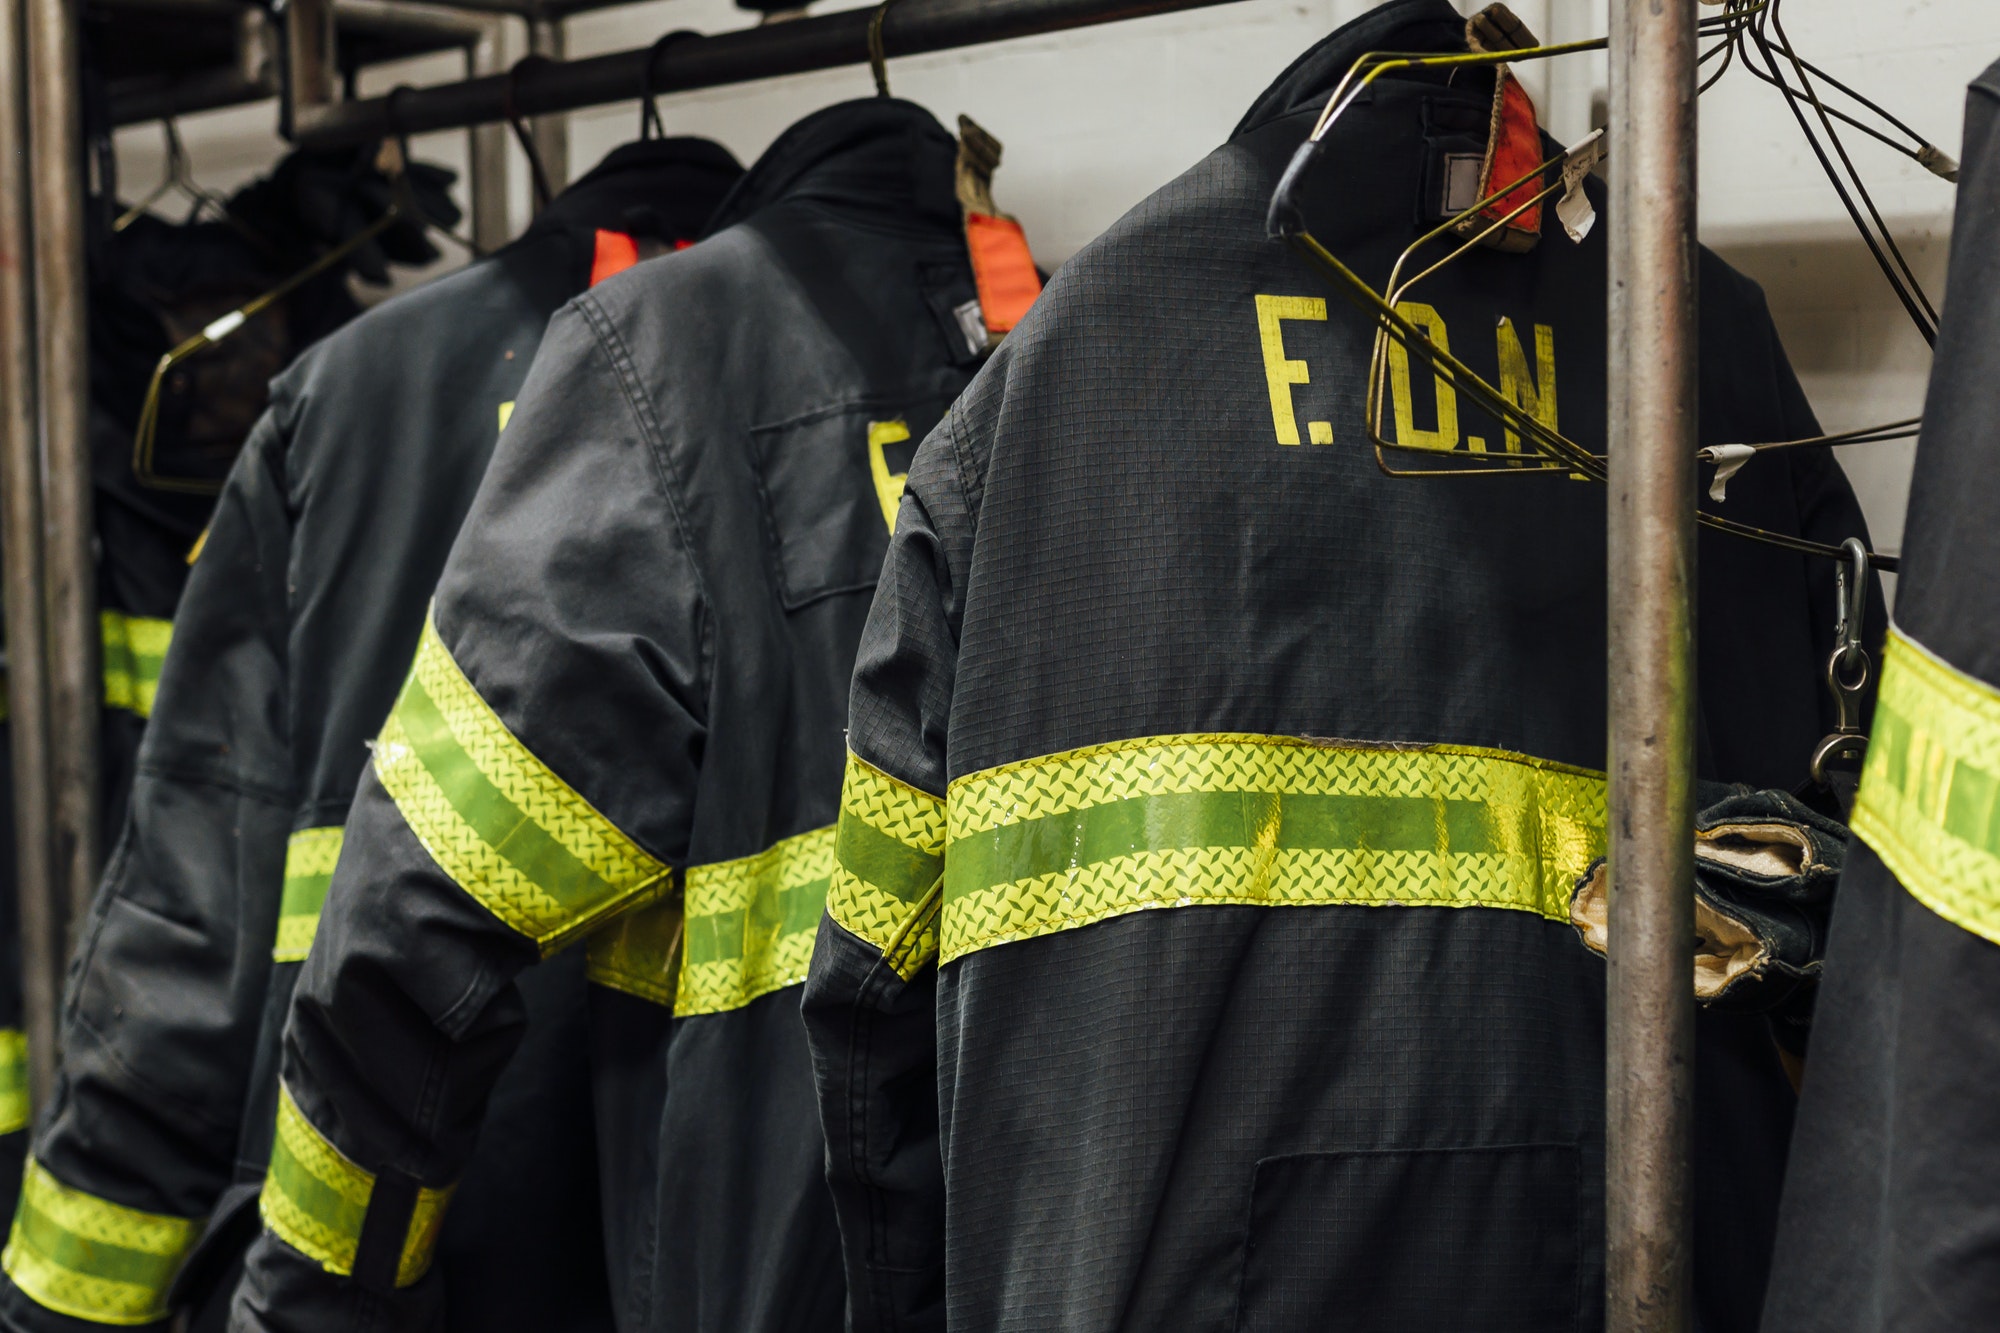 Firefighters' uniforms inside a firehouse